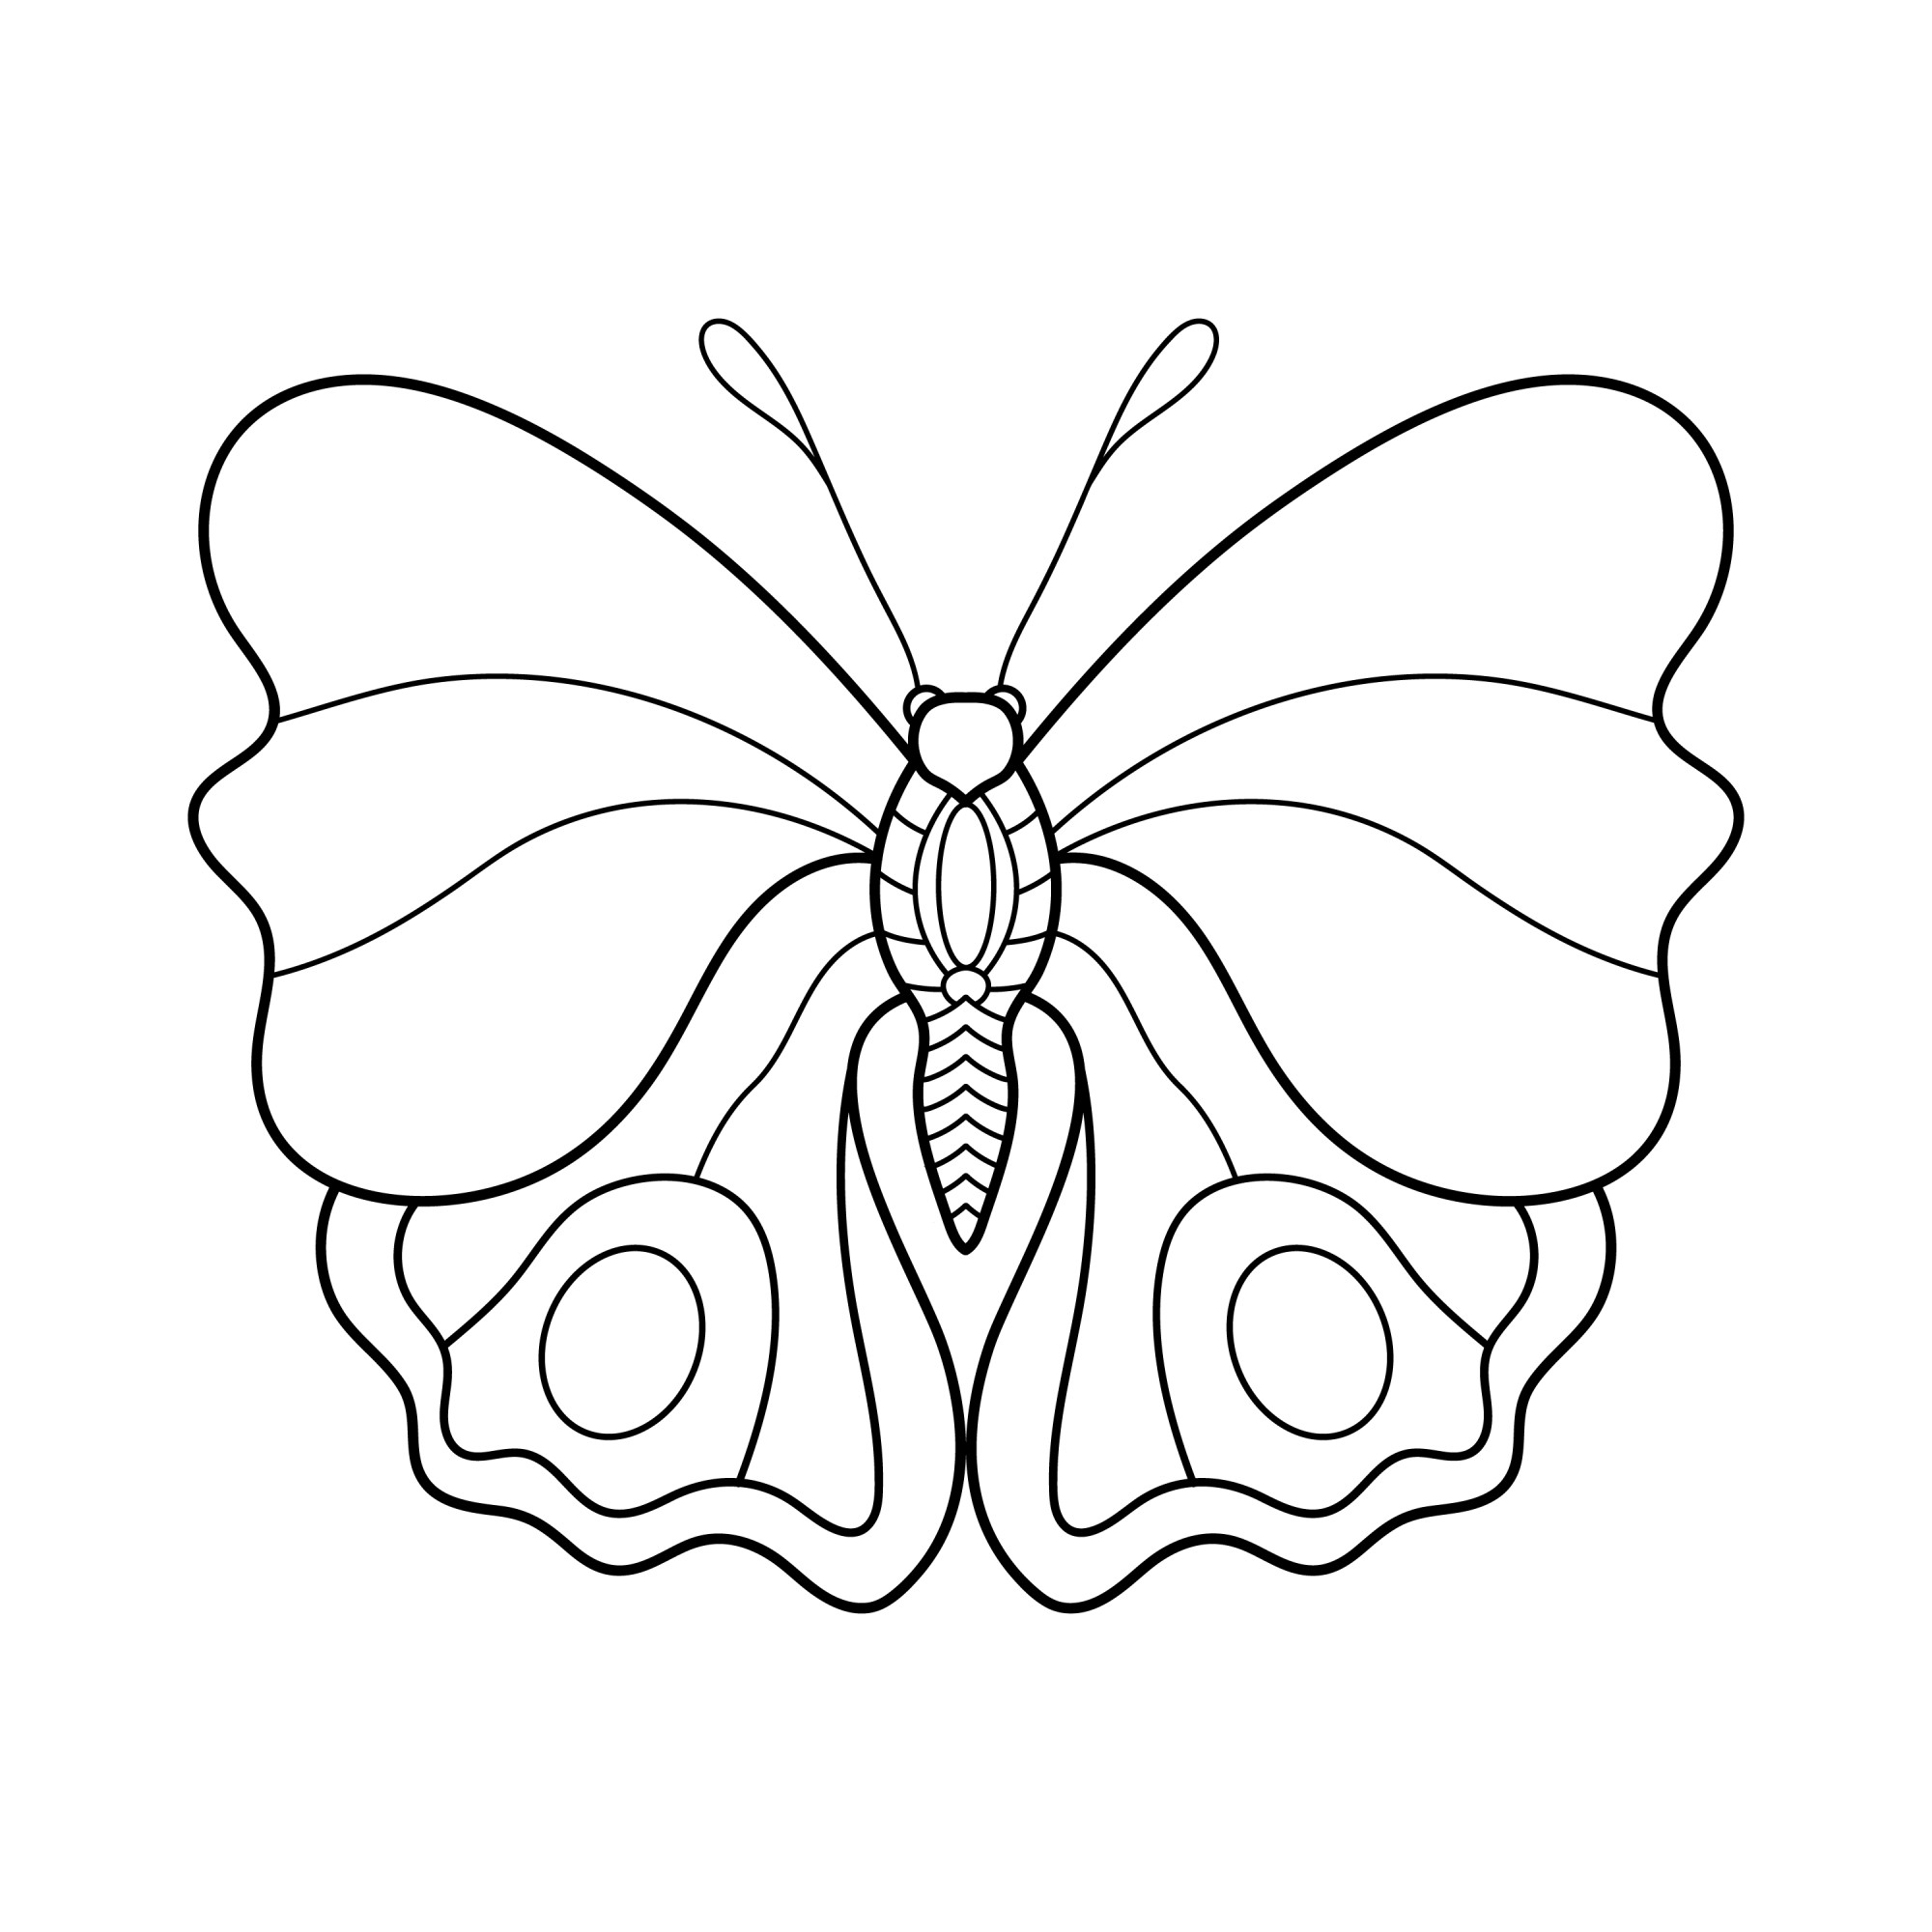 Раскраска для детей: бабочка капустница